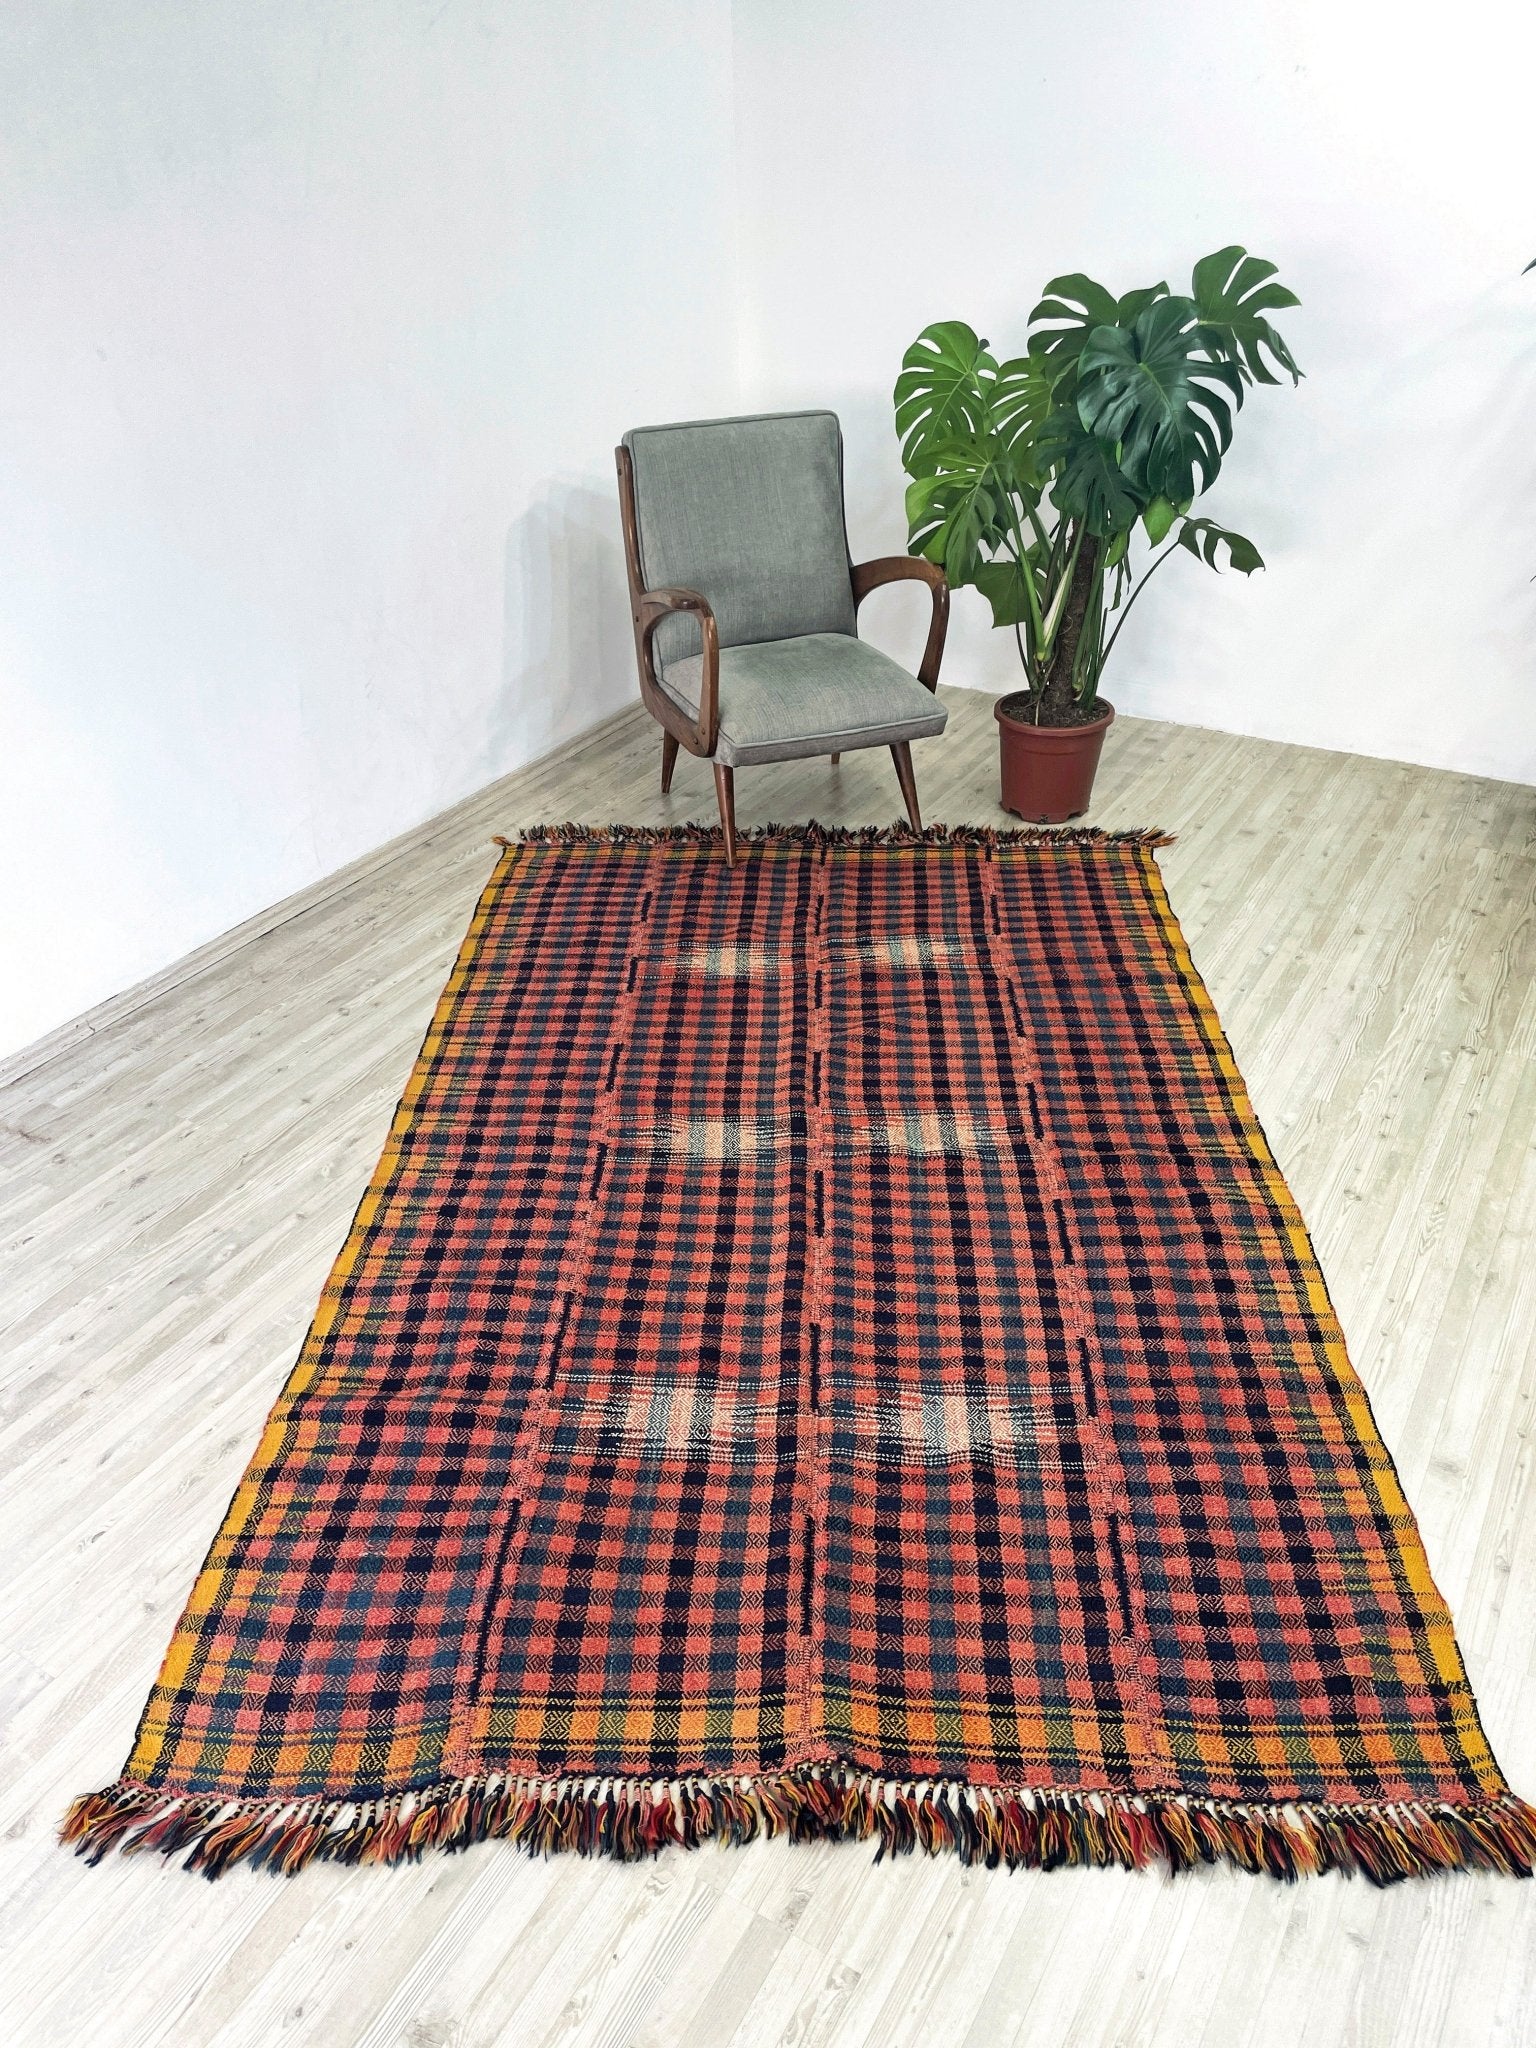 azerbaijani sofra vintage tablecloth blanket dining table kitchen home deco rug shop san francisco palo alto bay area